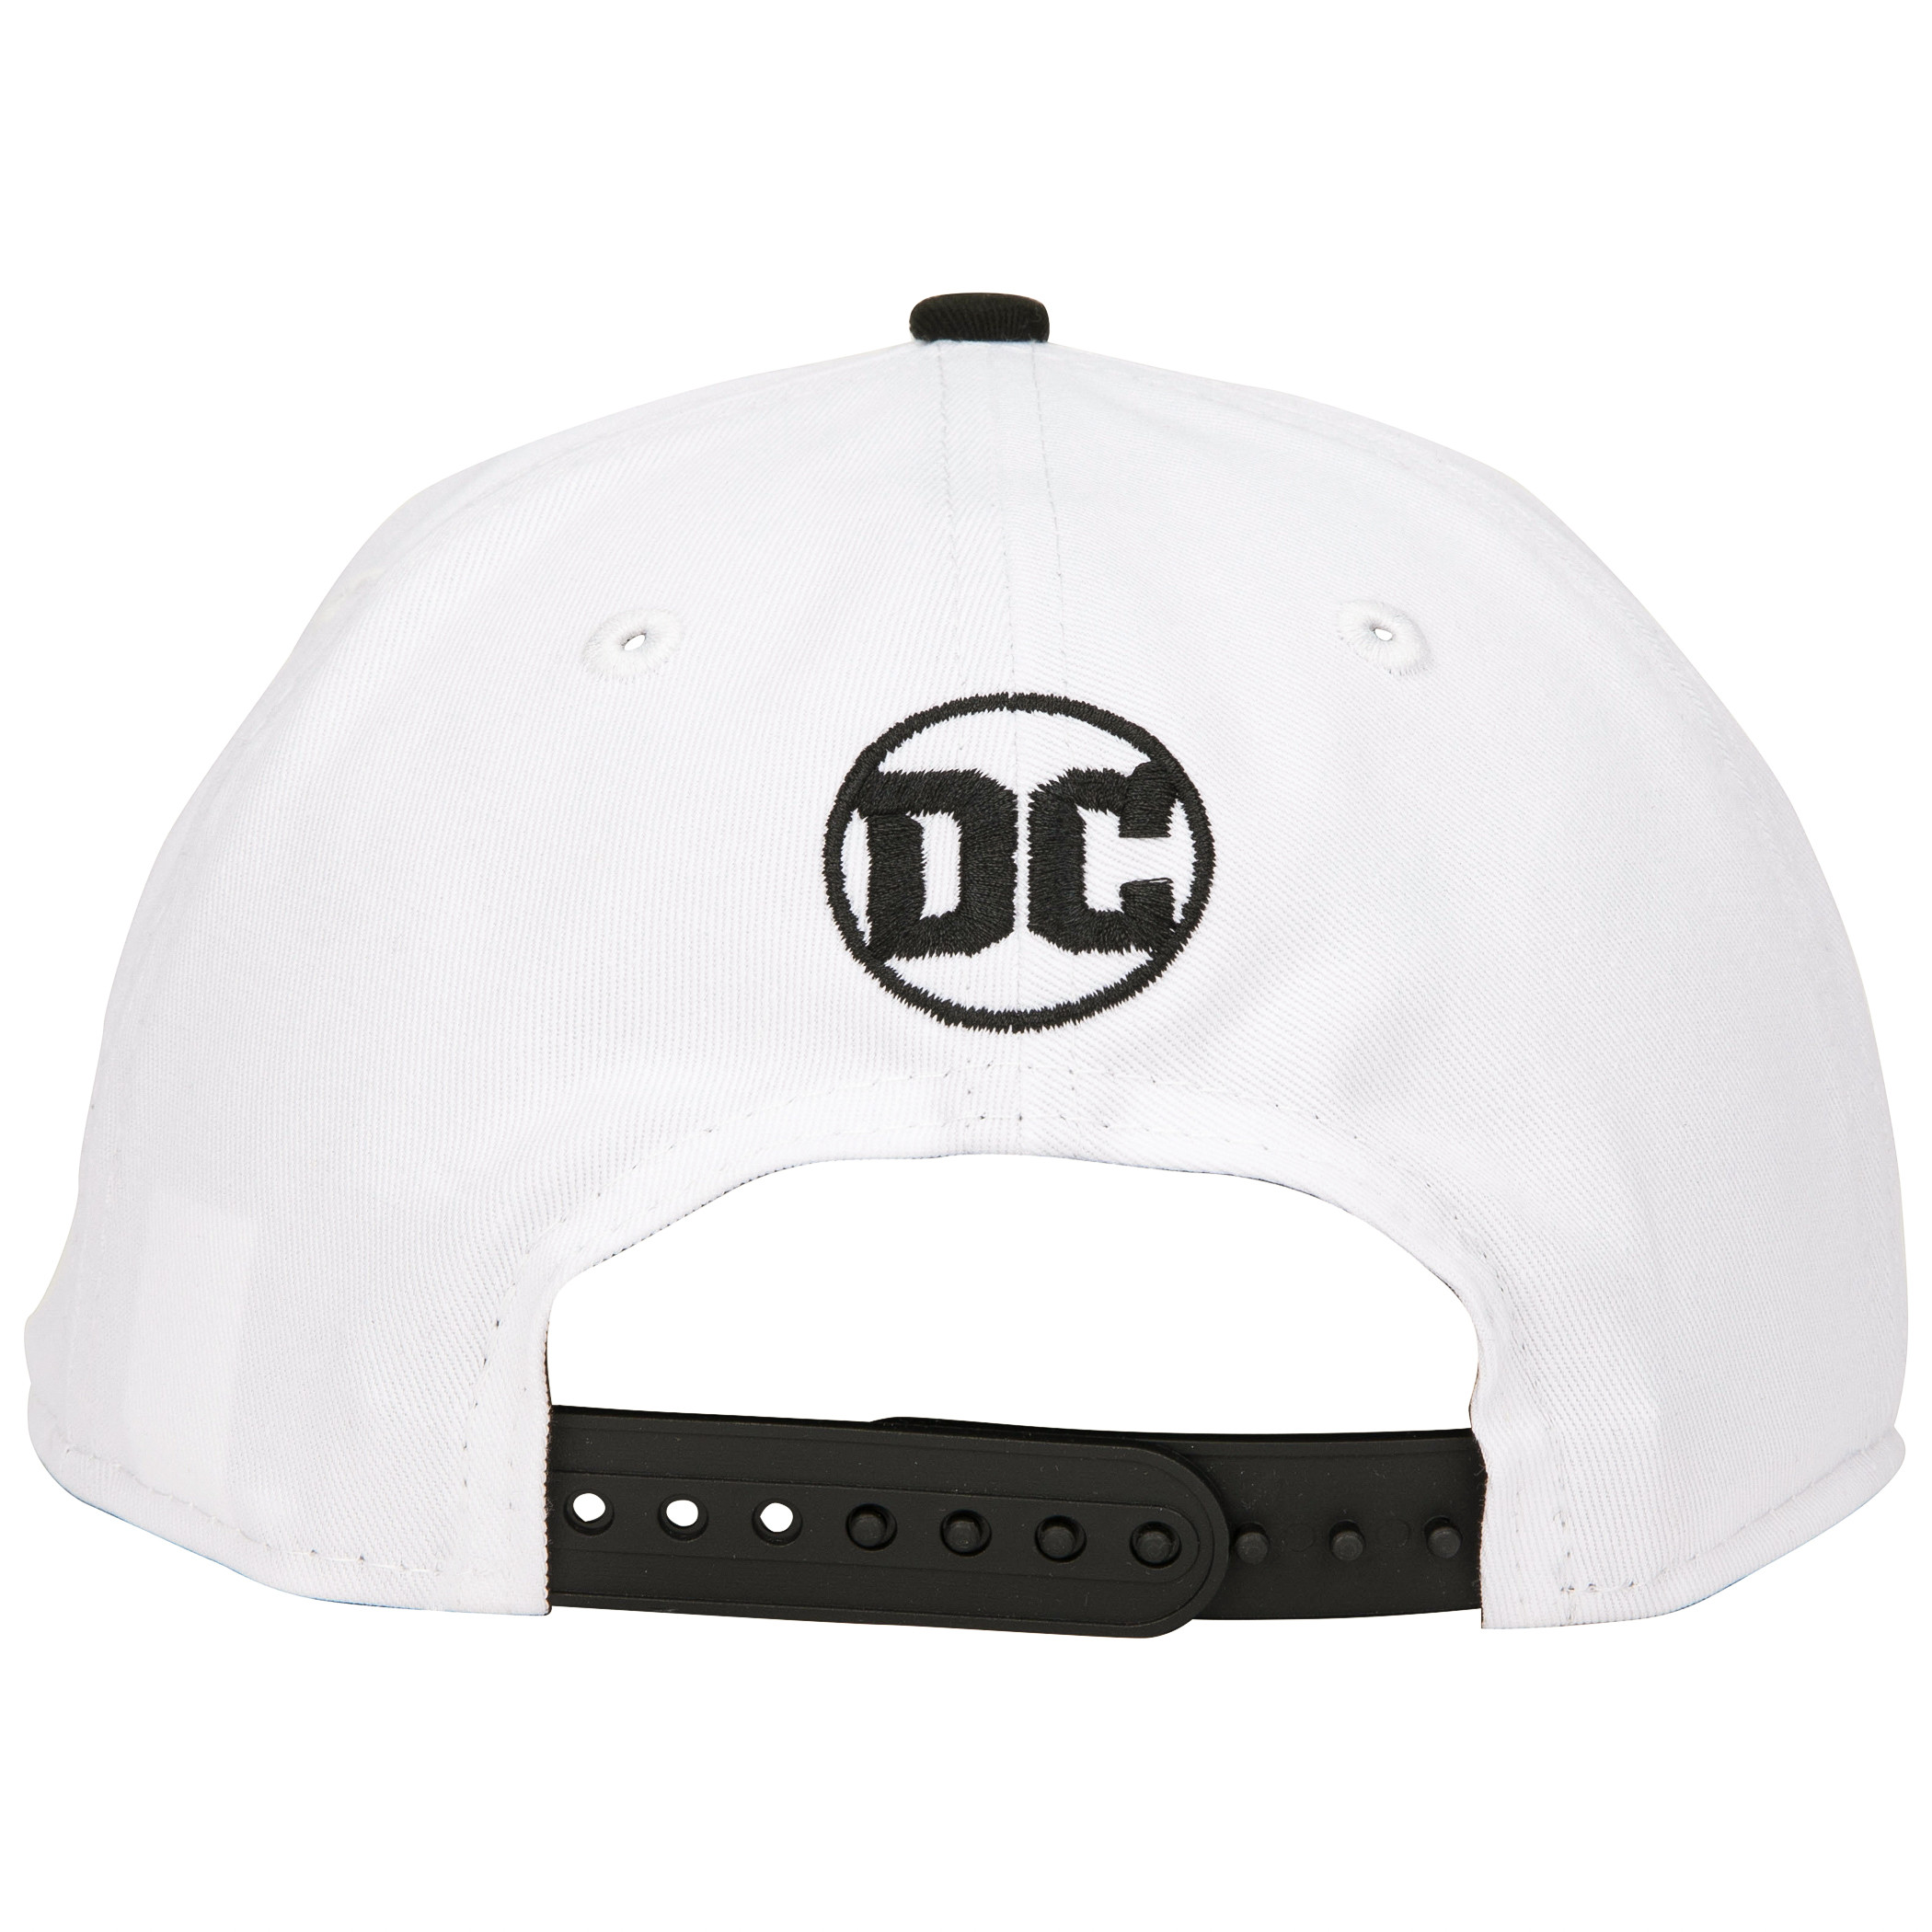 Batman Classic Logo White Colorway New Era Adjustable Golfer Rope Hat